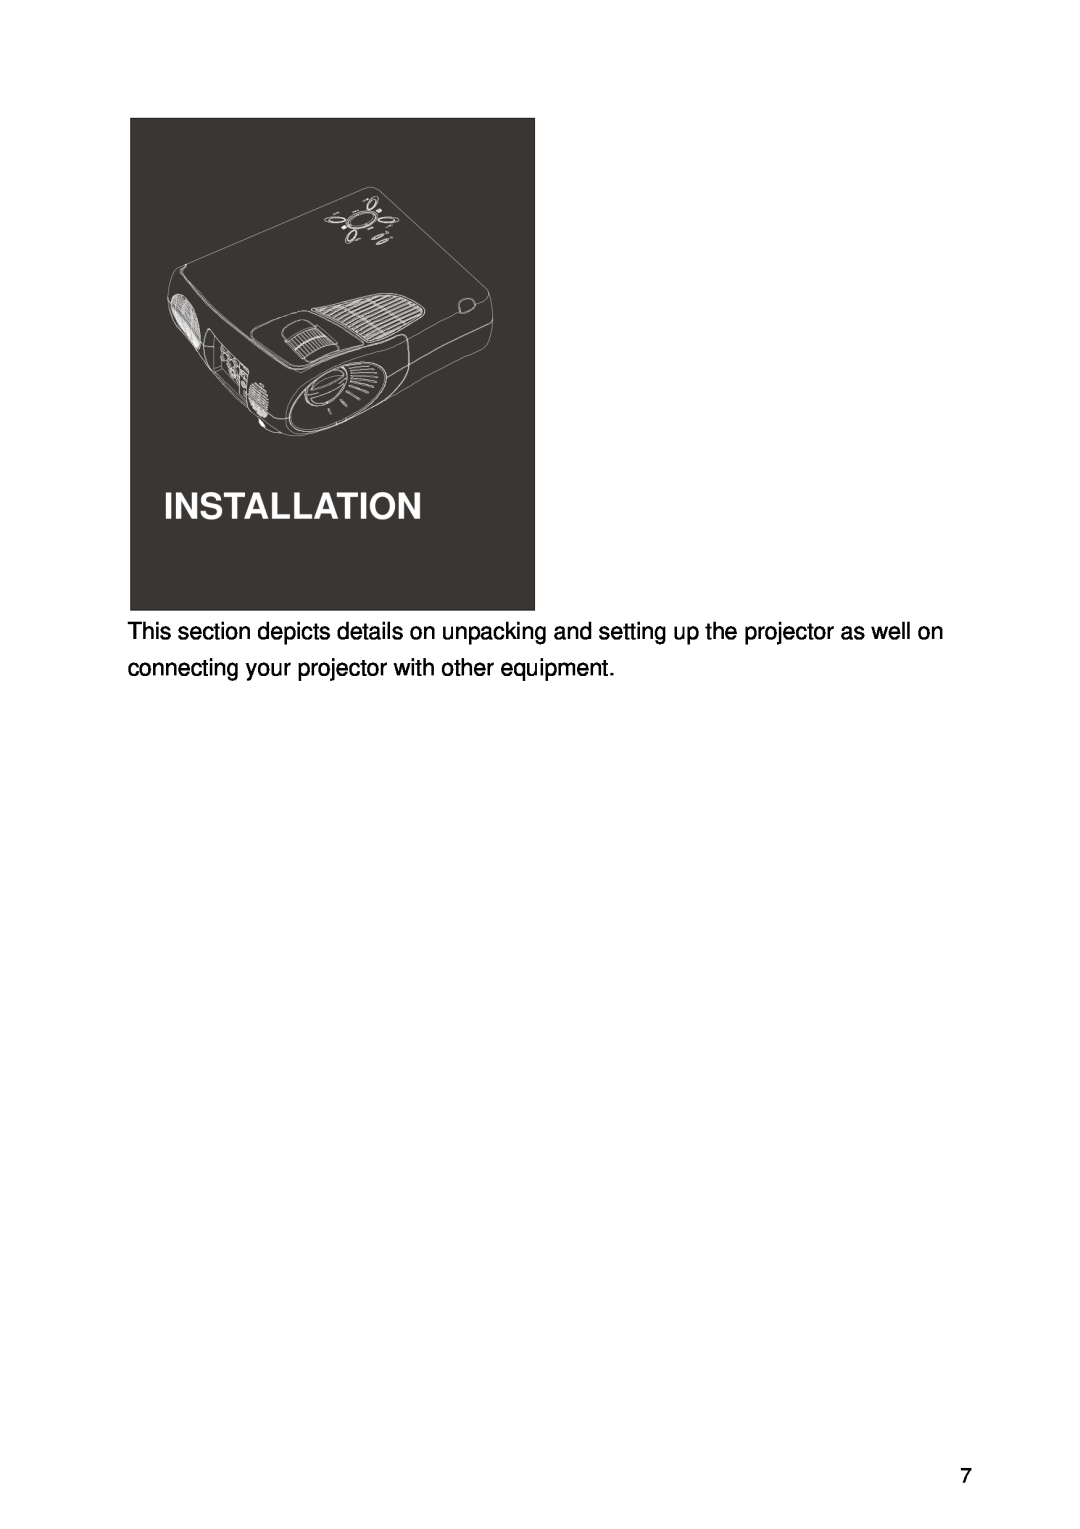 Microtek CX4 manual Installation 